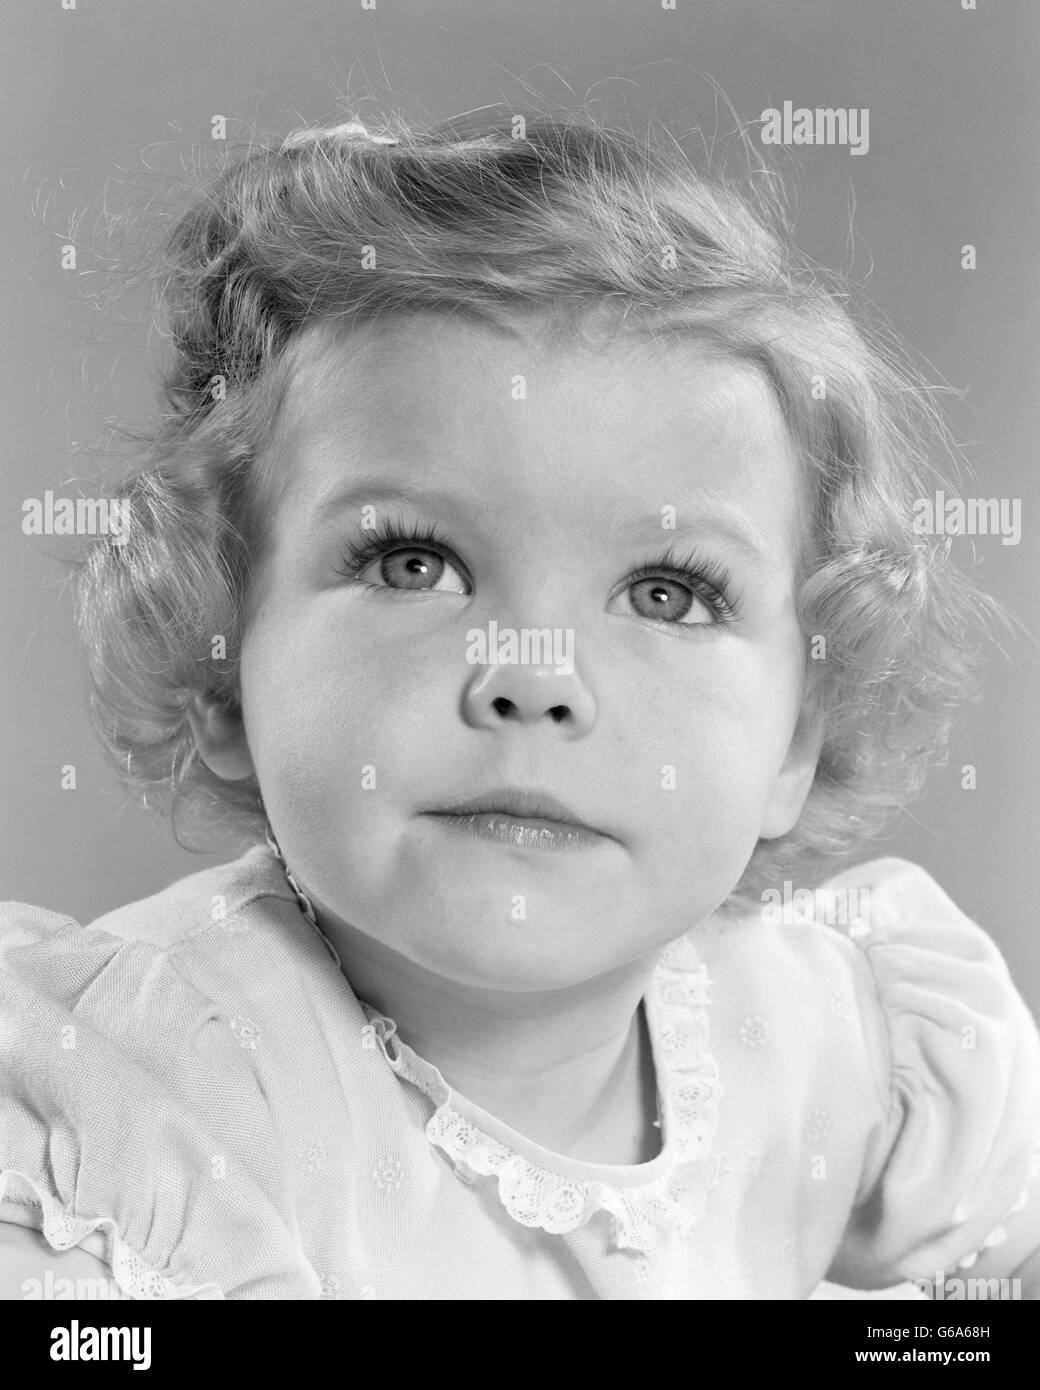 1950 SMILING LITTLE GIRL PORTRAIT TODDLER LOOKING UP AT CAMERA Banque D'Images